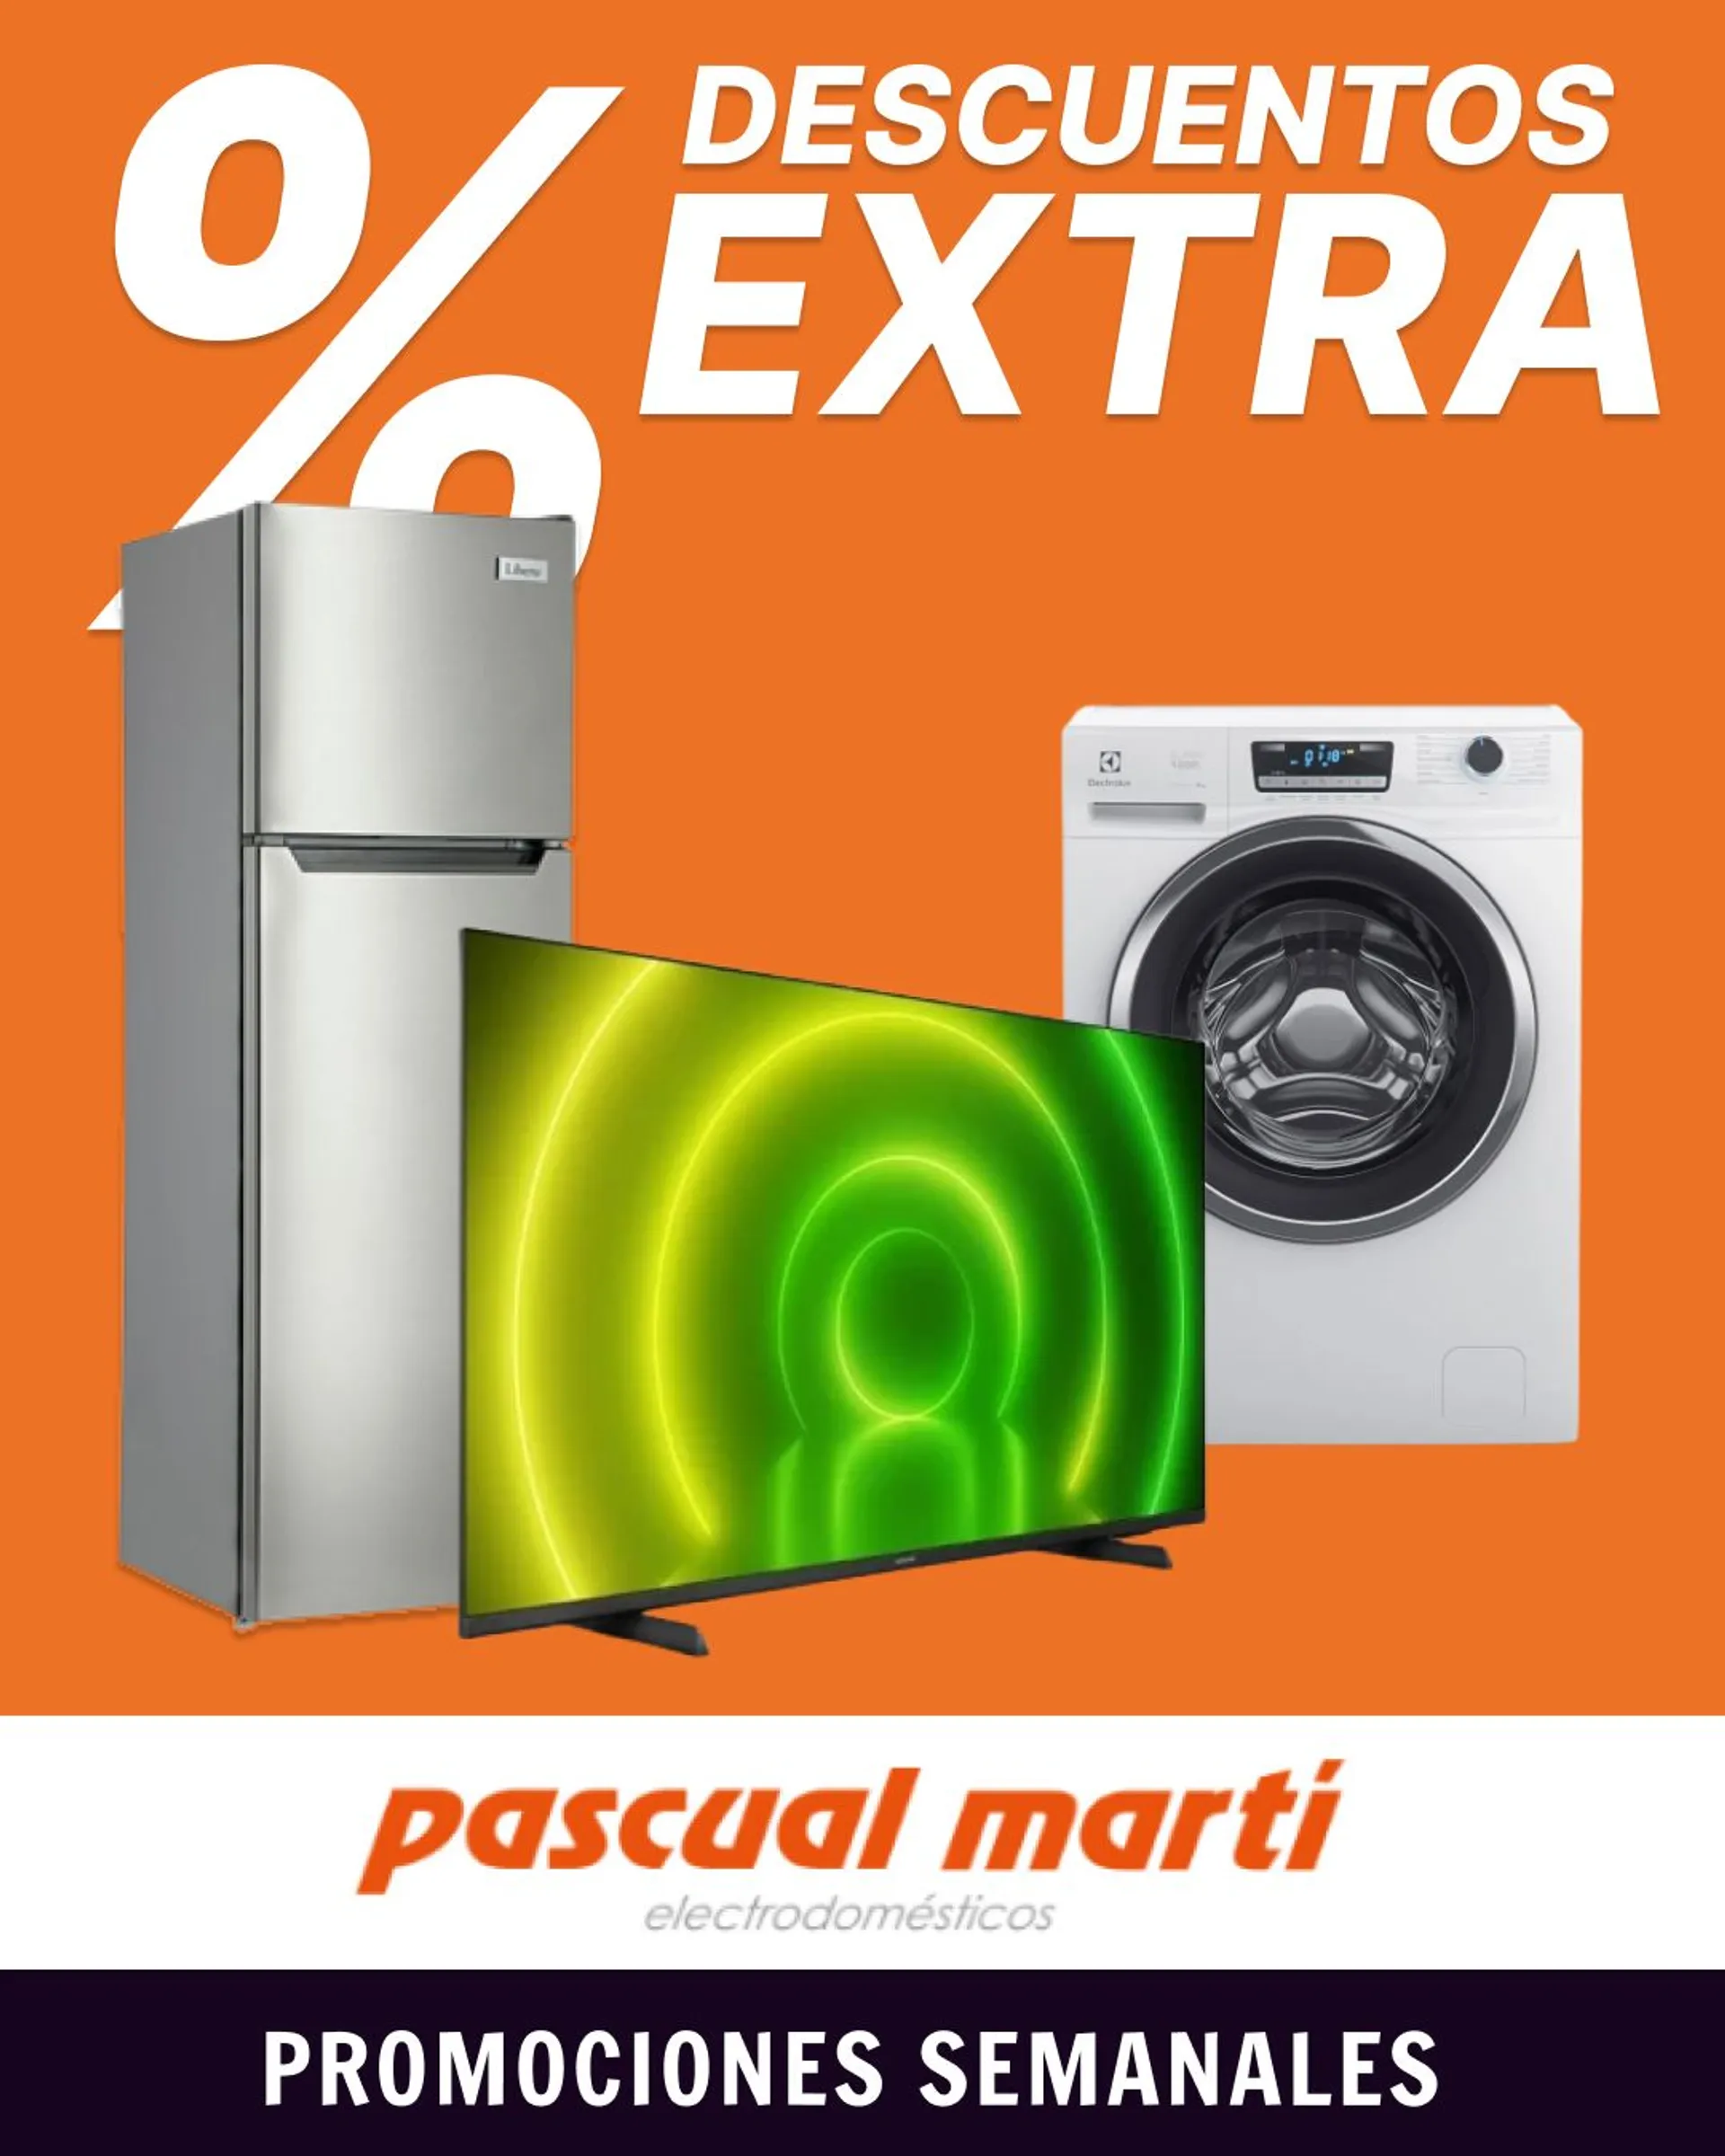 Pascual Martí - Electrodomésticos